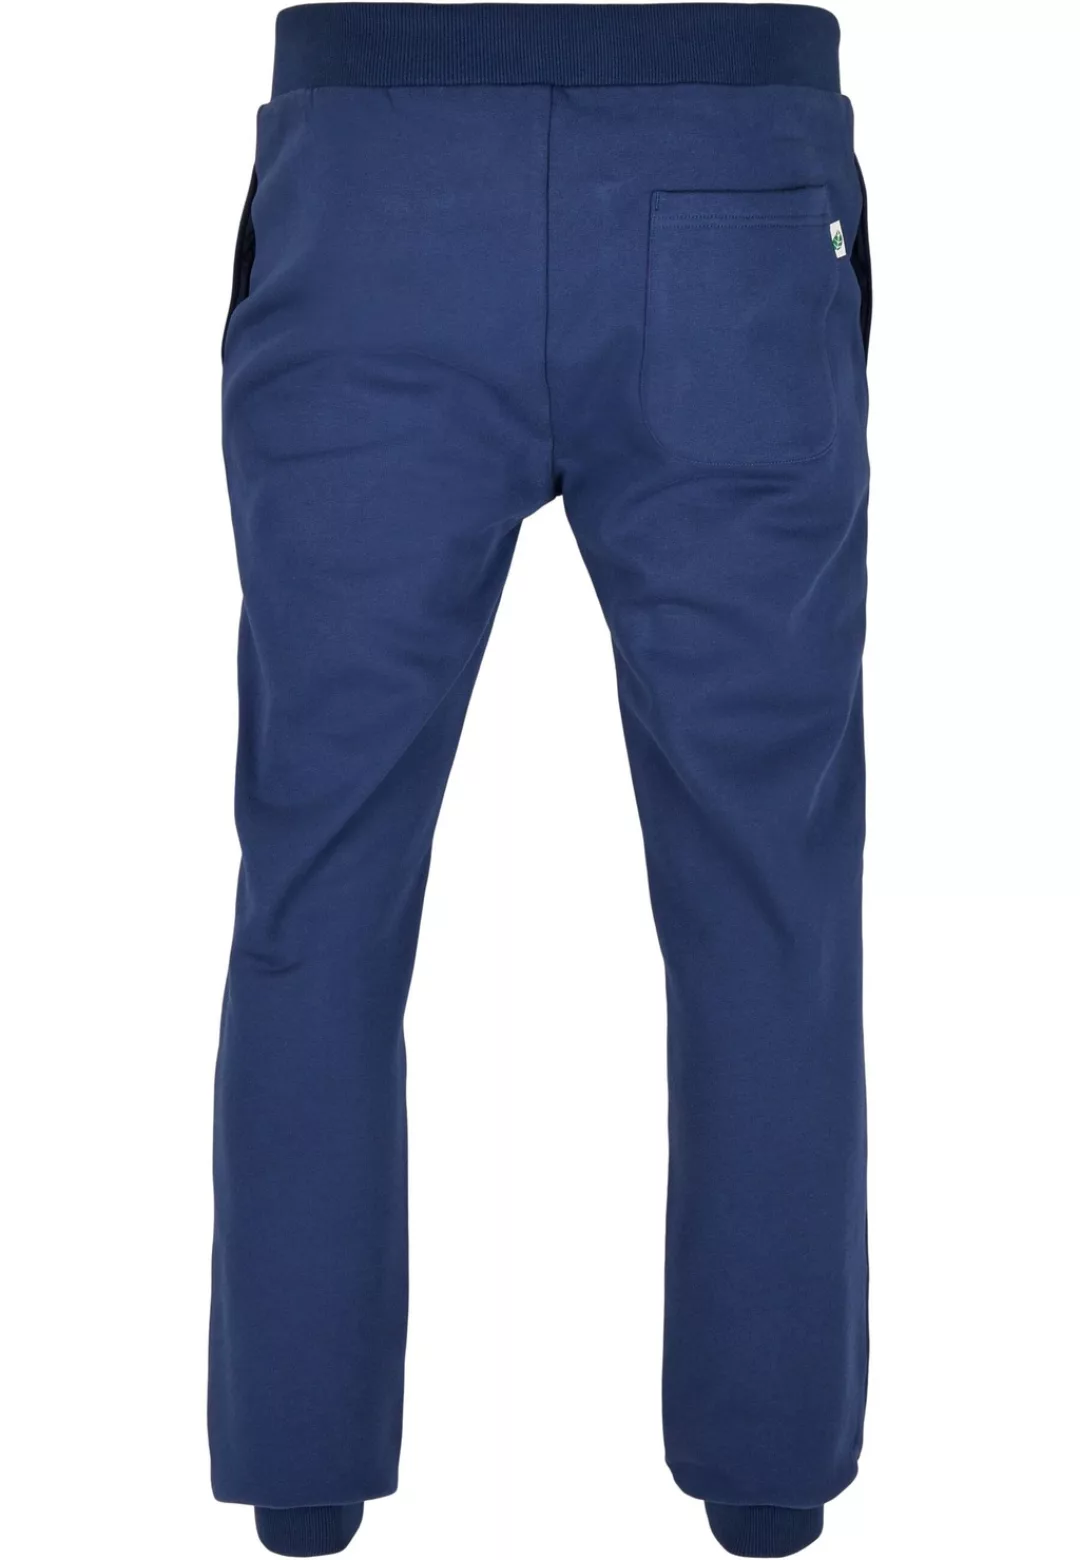 URBAN CLASSICS Jogginghose "Urban Classics Herren Organic Basic Sweatpants" günstig online kaufen